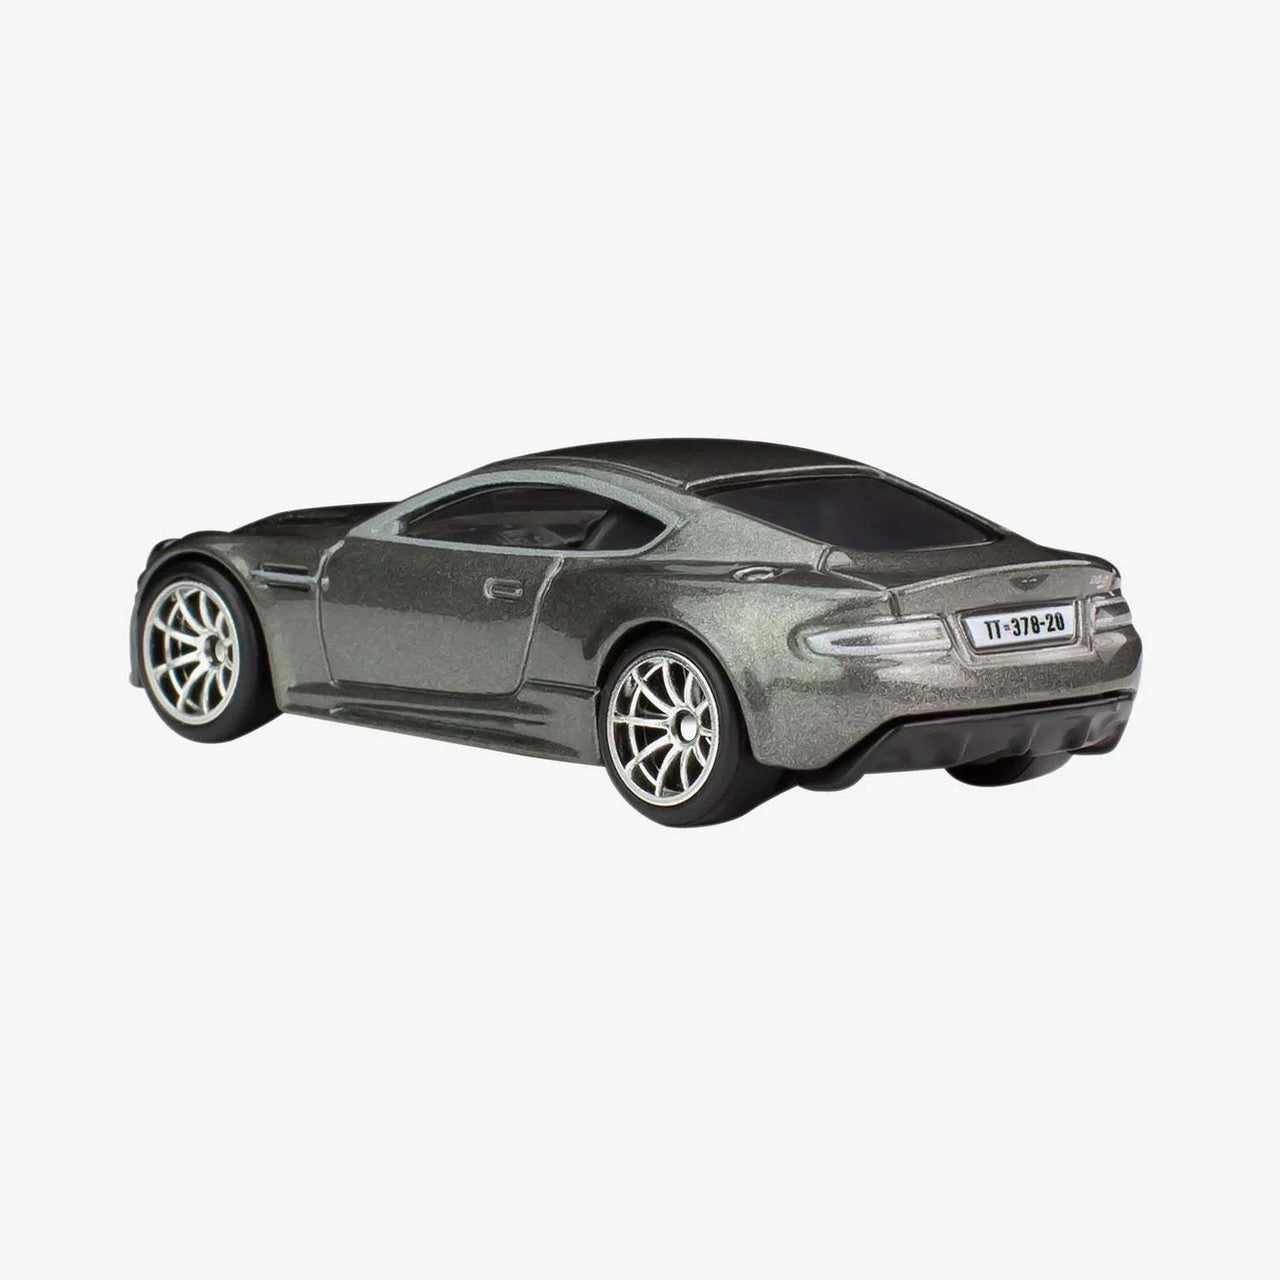 Hot Wheels Premium 1:64 Retro Entertainment 007 Aston Martin DB5